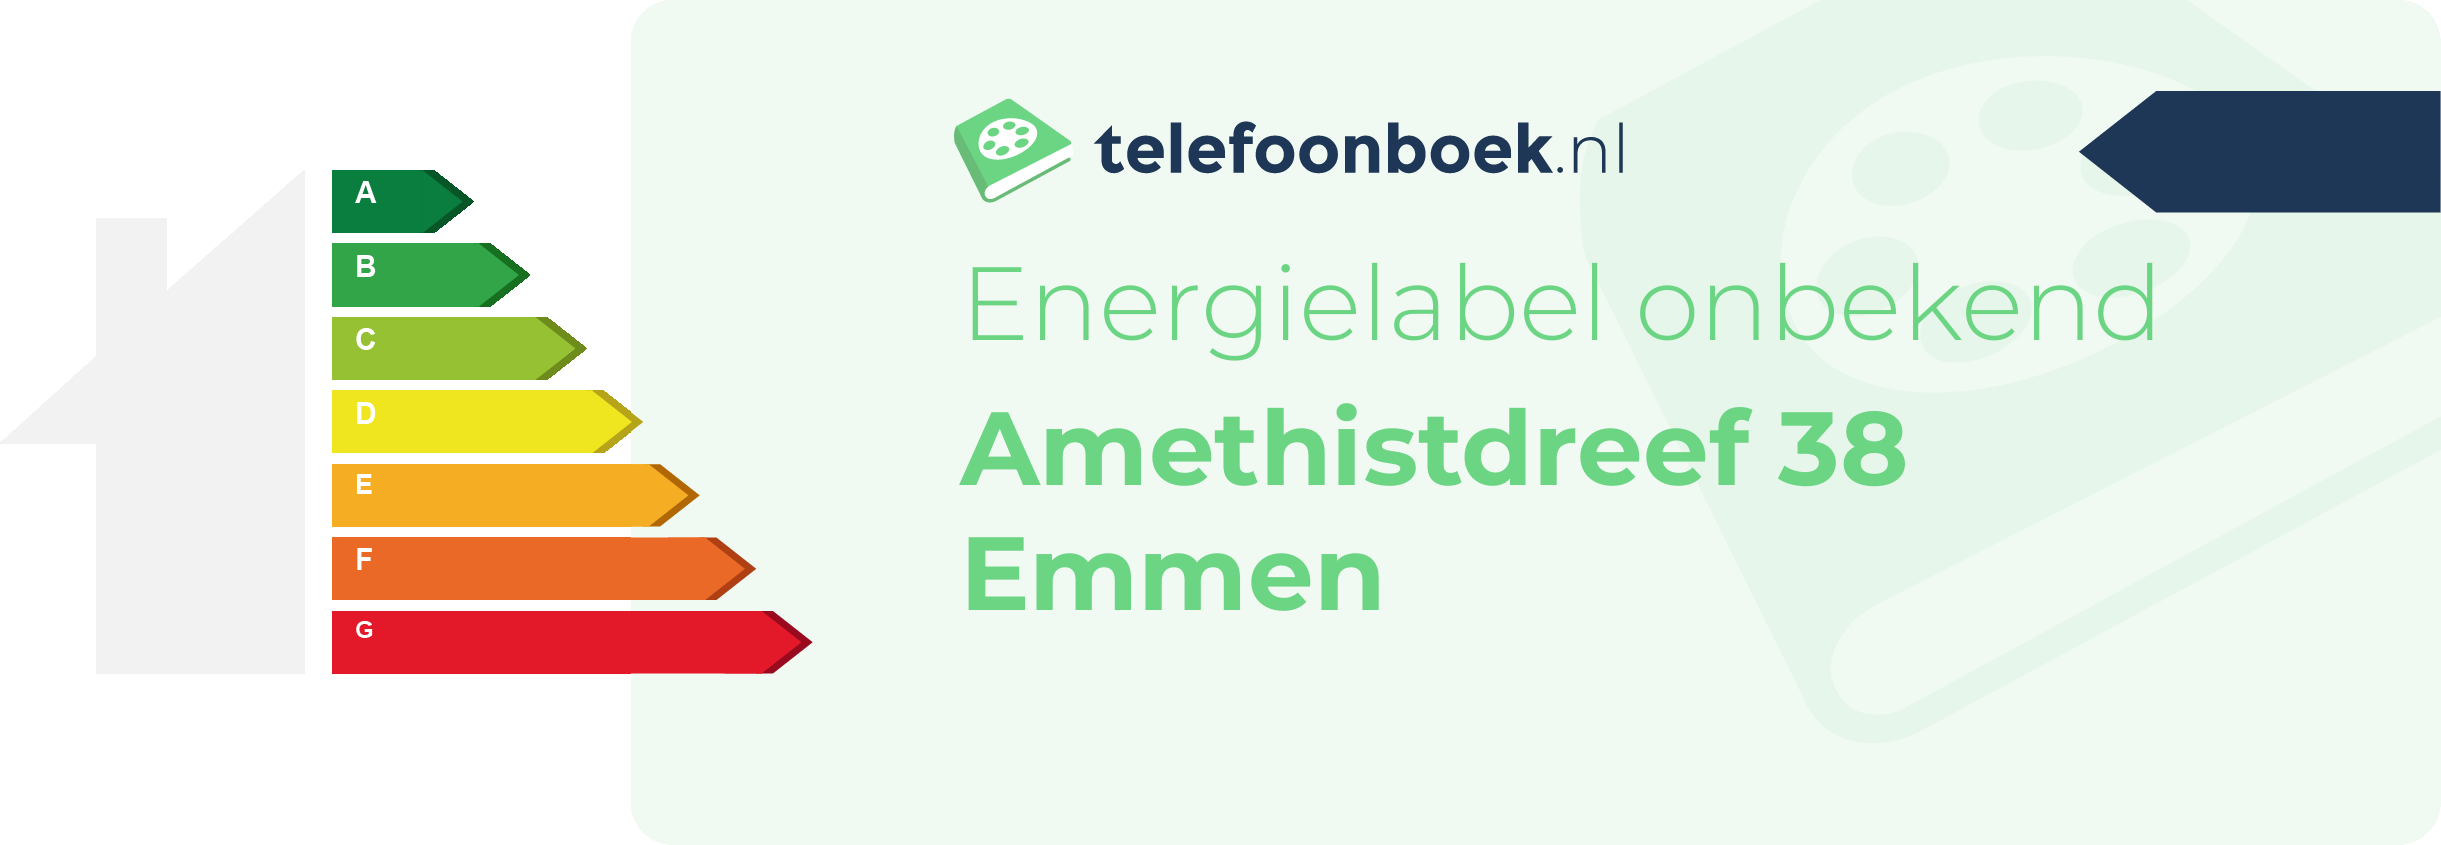 Energielabel Amethistdreef 38 Emmen